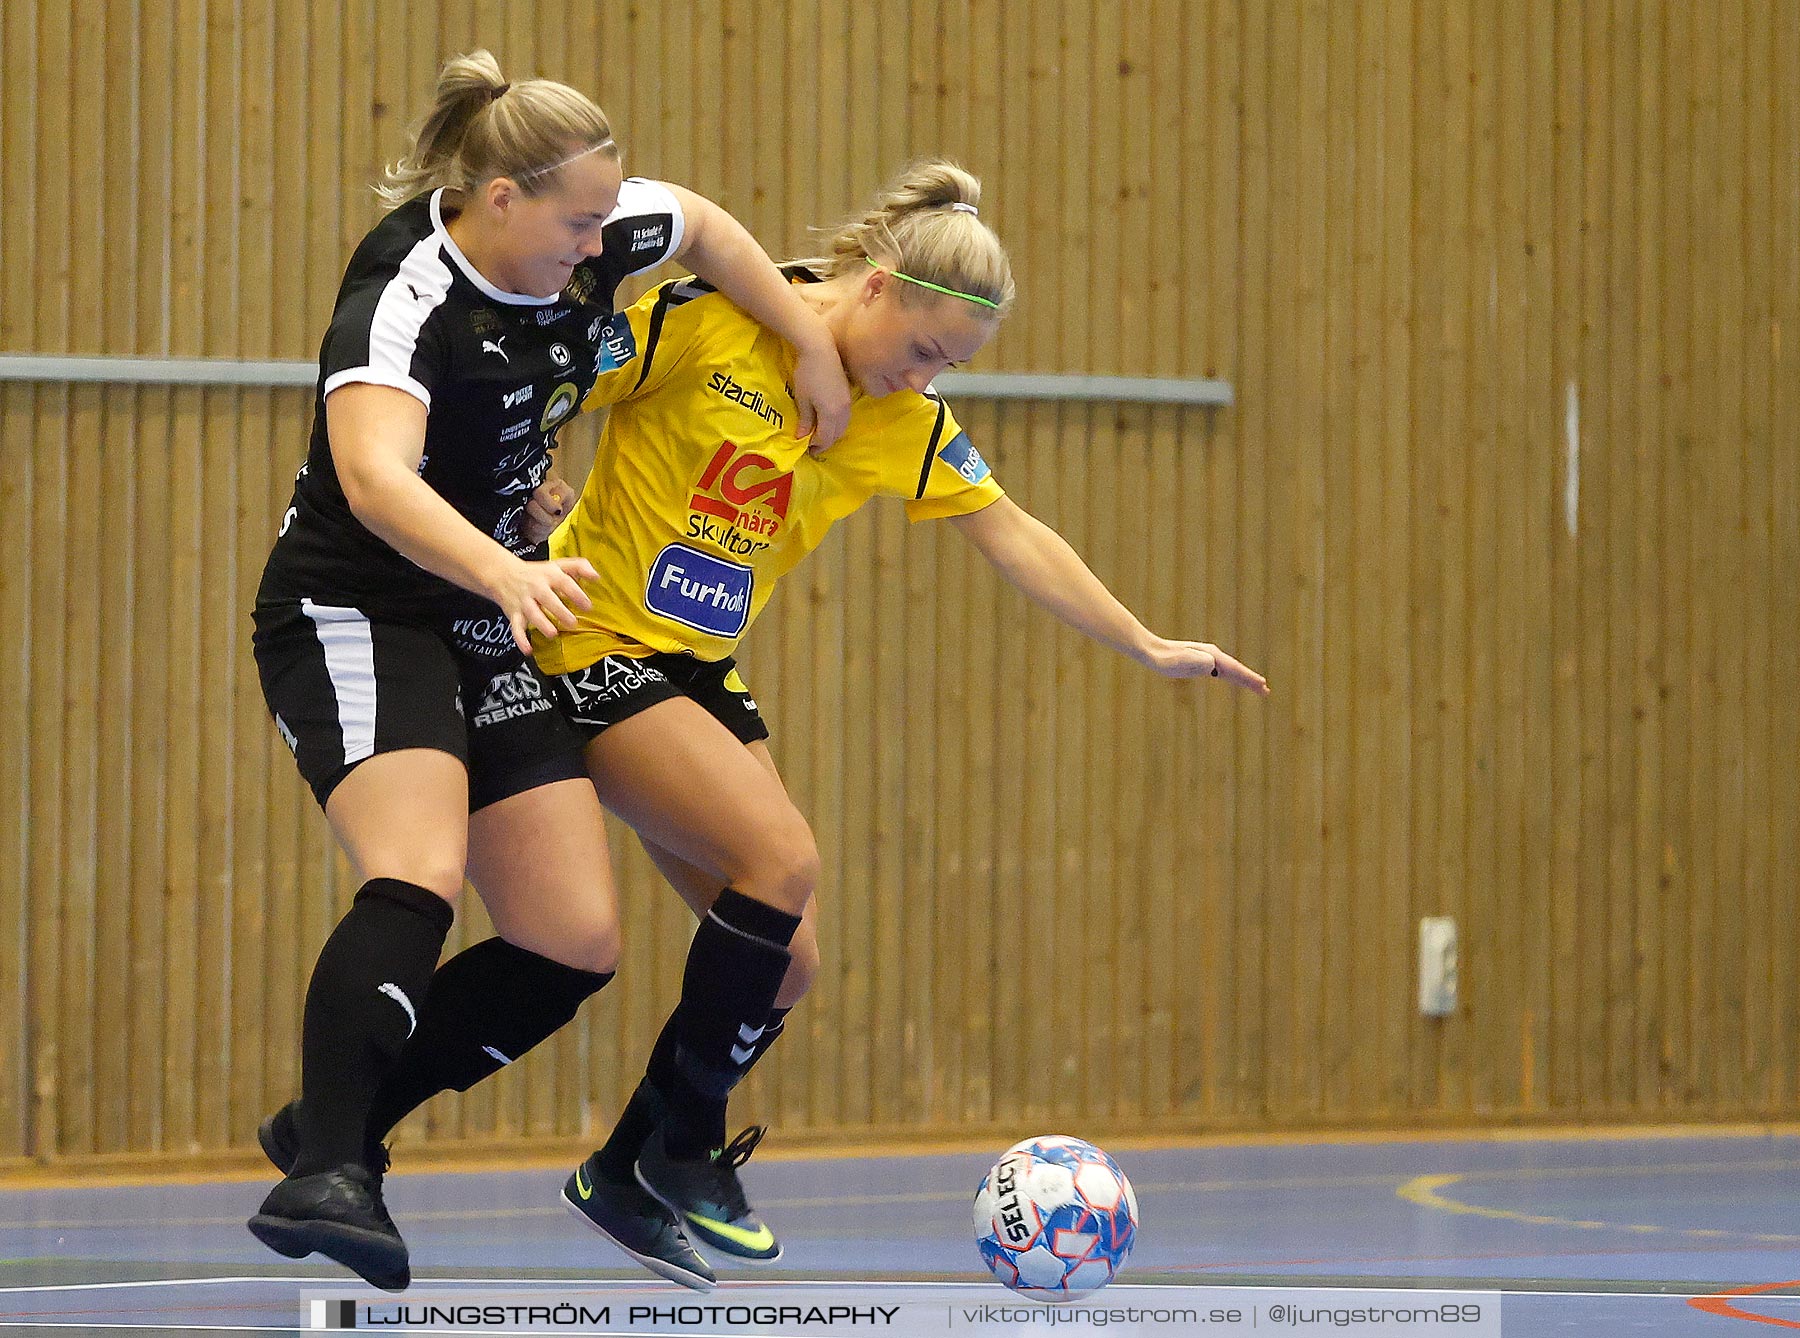 Skövde Futsalcup 2021 Damer Örebro Futsal Club-Skultorps IF 2,dam,Arena Skövde,Skövde,Sverige,Futsal,,2021,270458